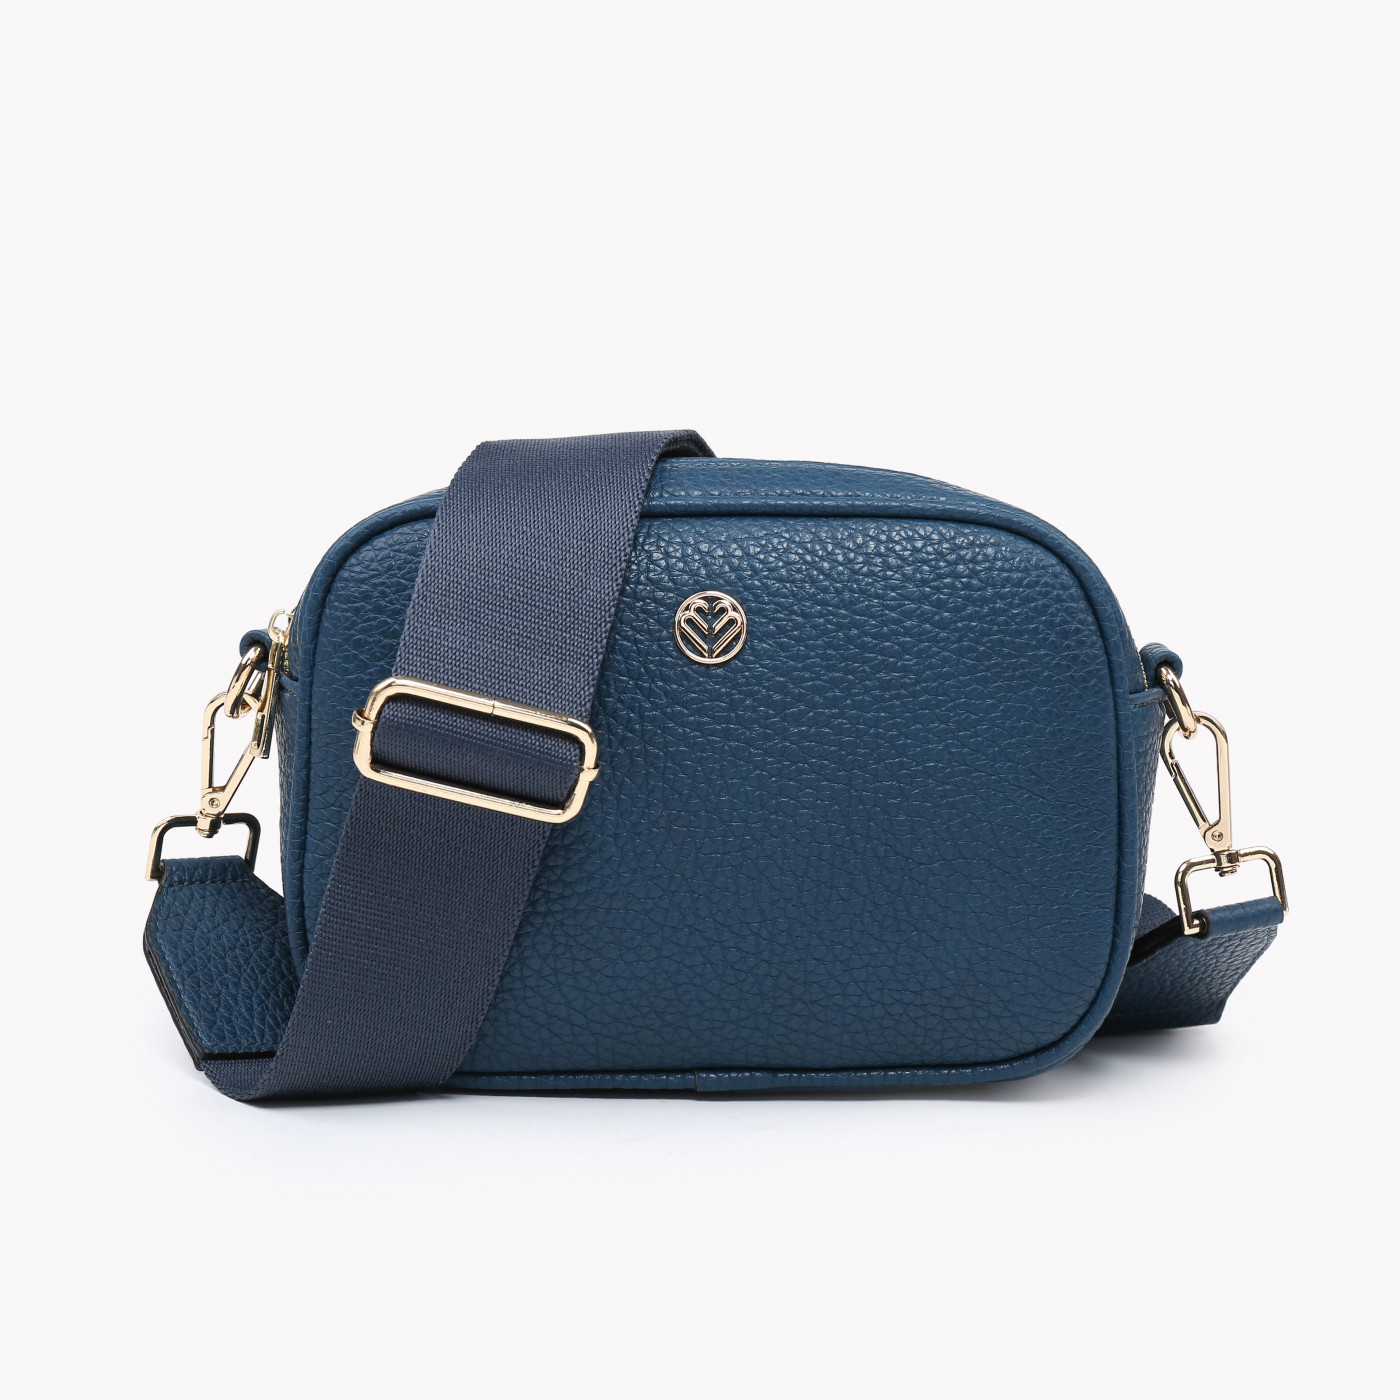 Giani Bernini - Saffiano CrossBody Bag - Denim Floral | Bags, Navy leather  bag, Blue crossbody purse